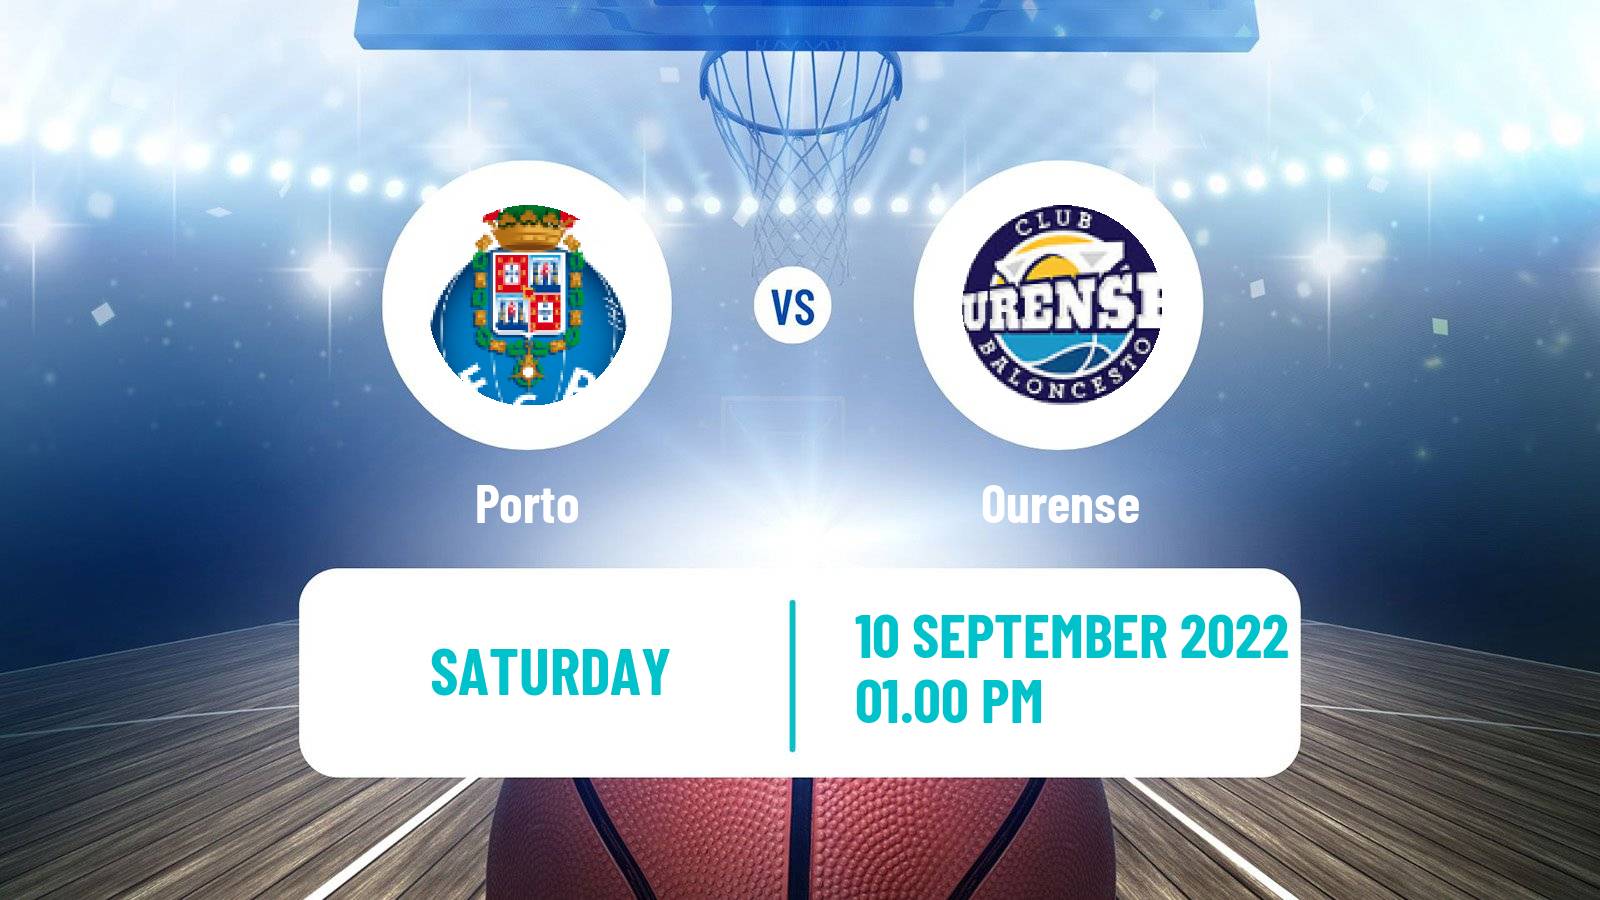 Basketball Club Friendly Basketball Porto - Ourense